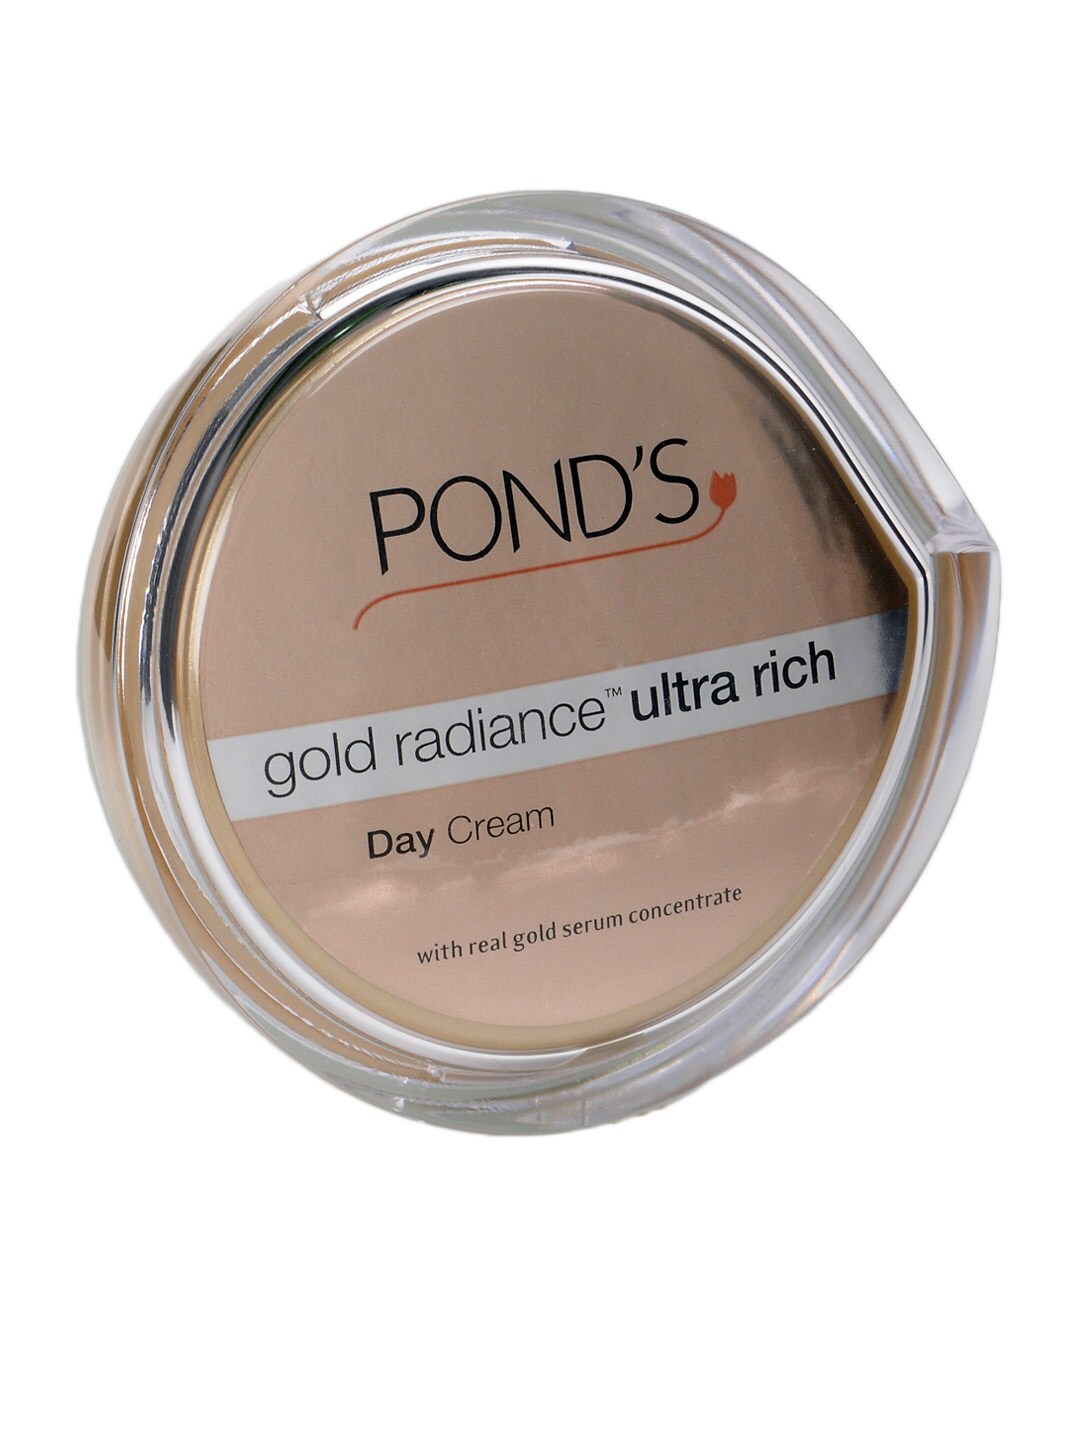 Pond's Gold Radiance Ultra Rich Day Cream